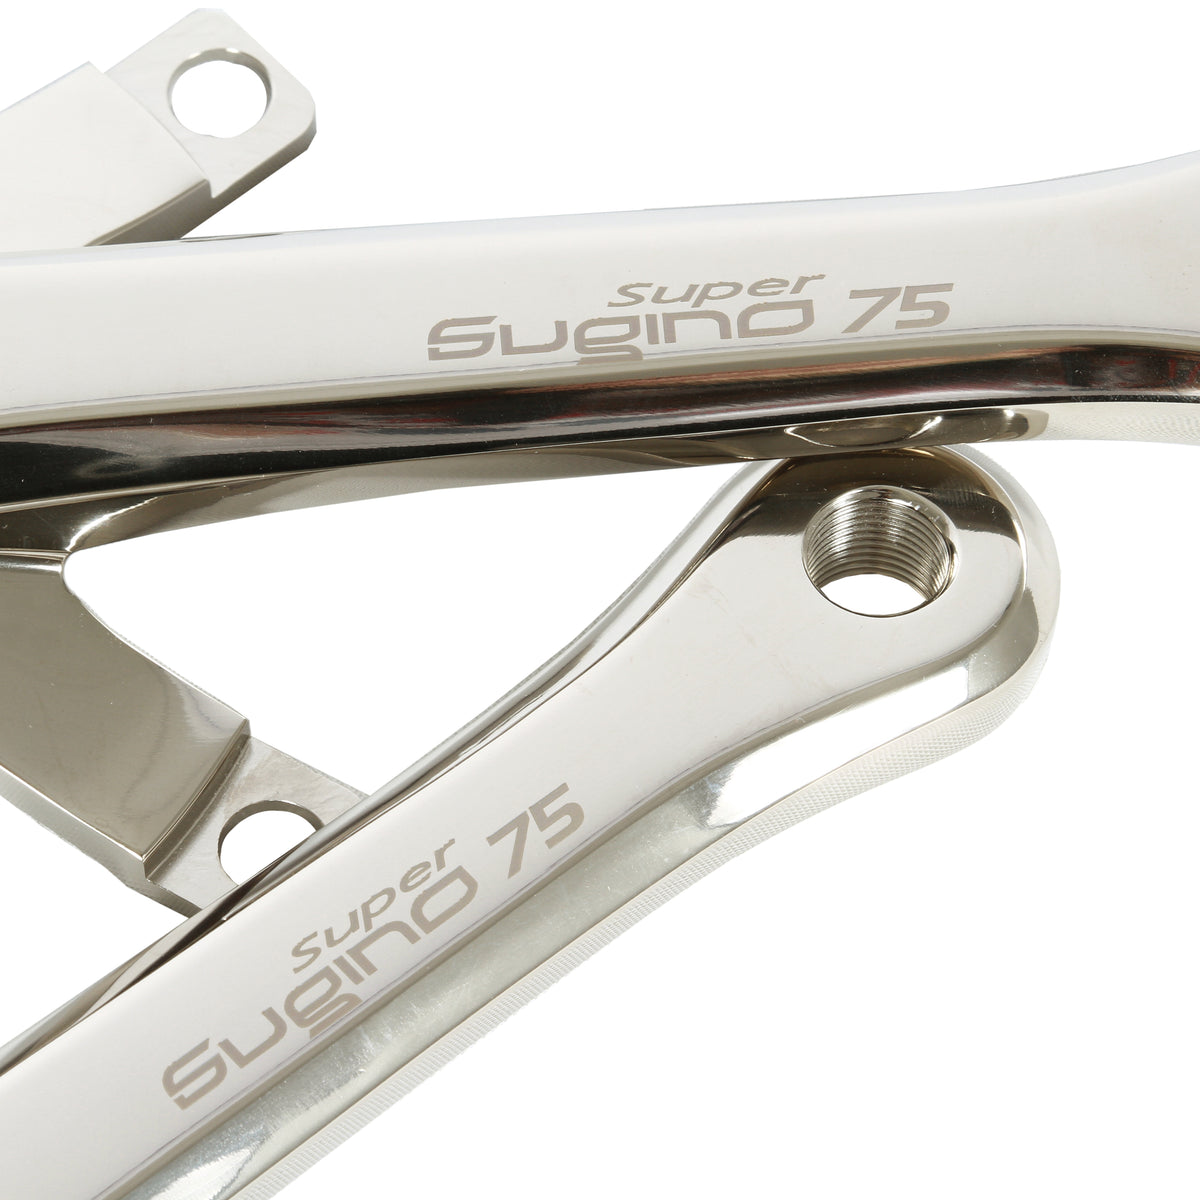 Sugino Super 75 fixed gear track crank arms